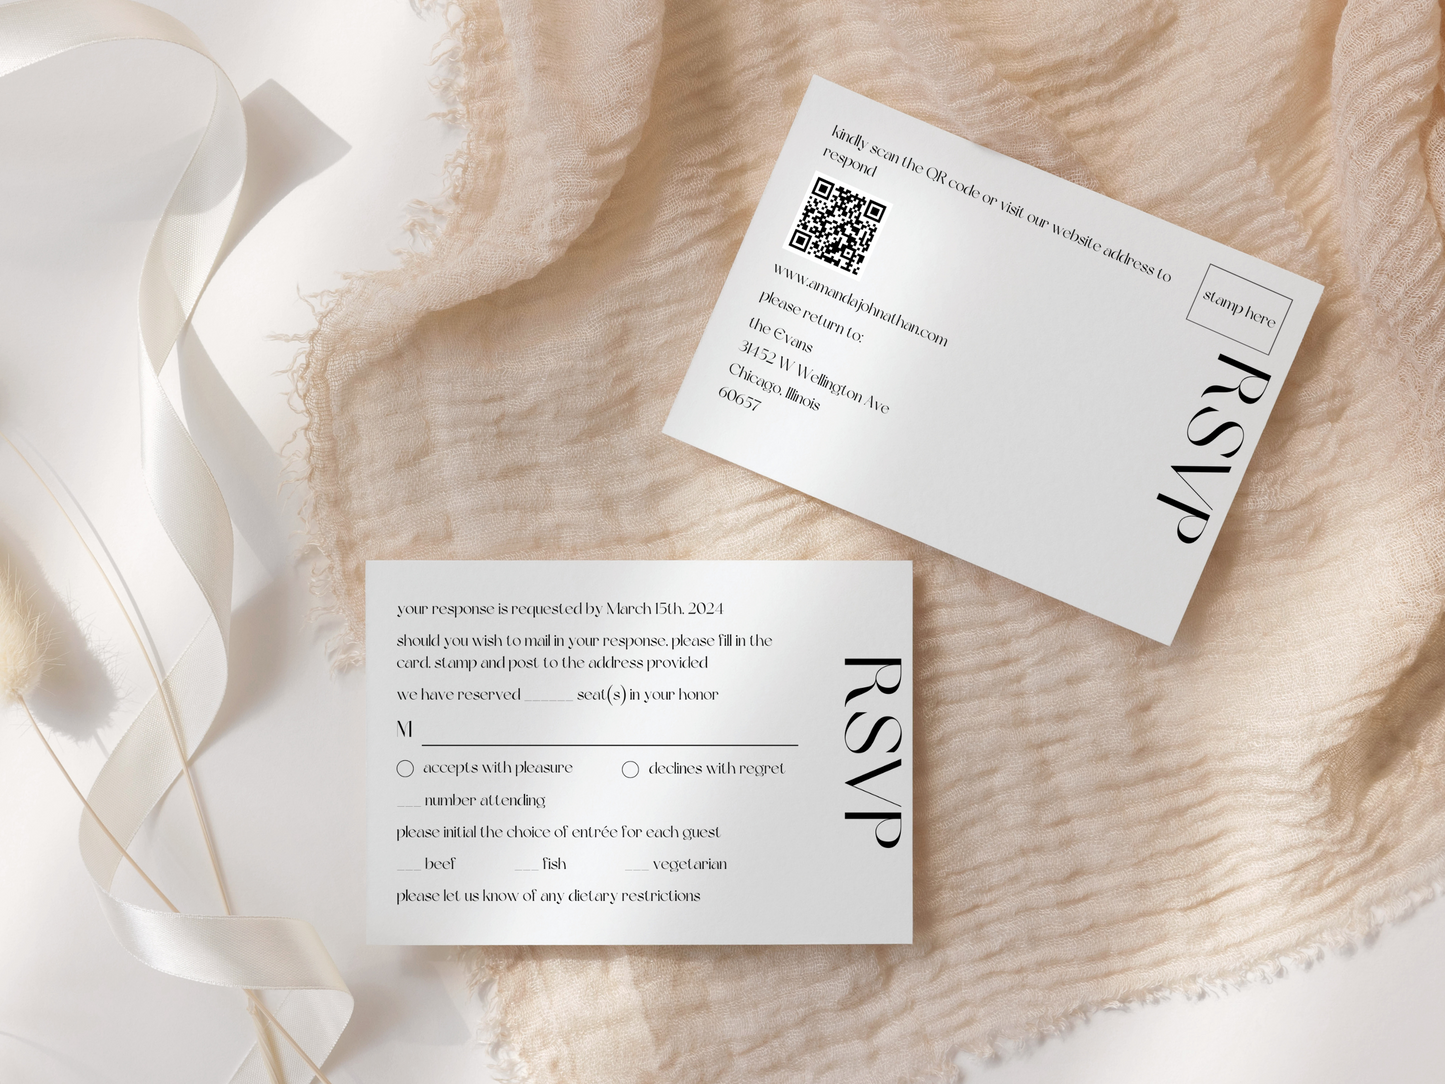 Modern Minimalist Photo Wedding Invitation Suite with Envelope Decorative Template Bundle, Printable Templates